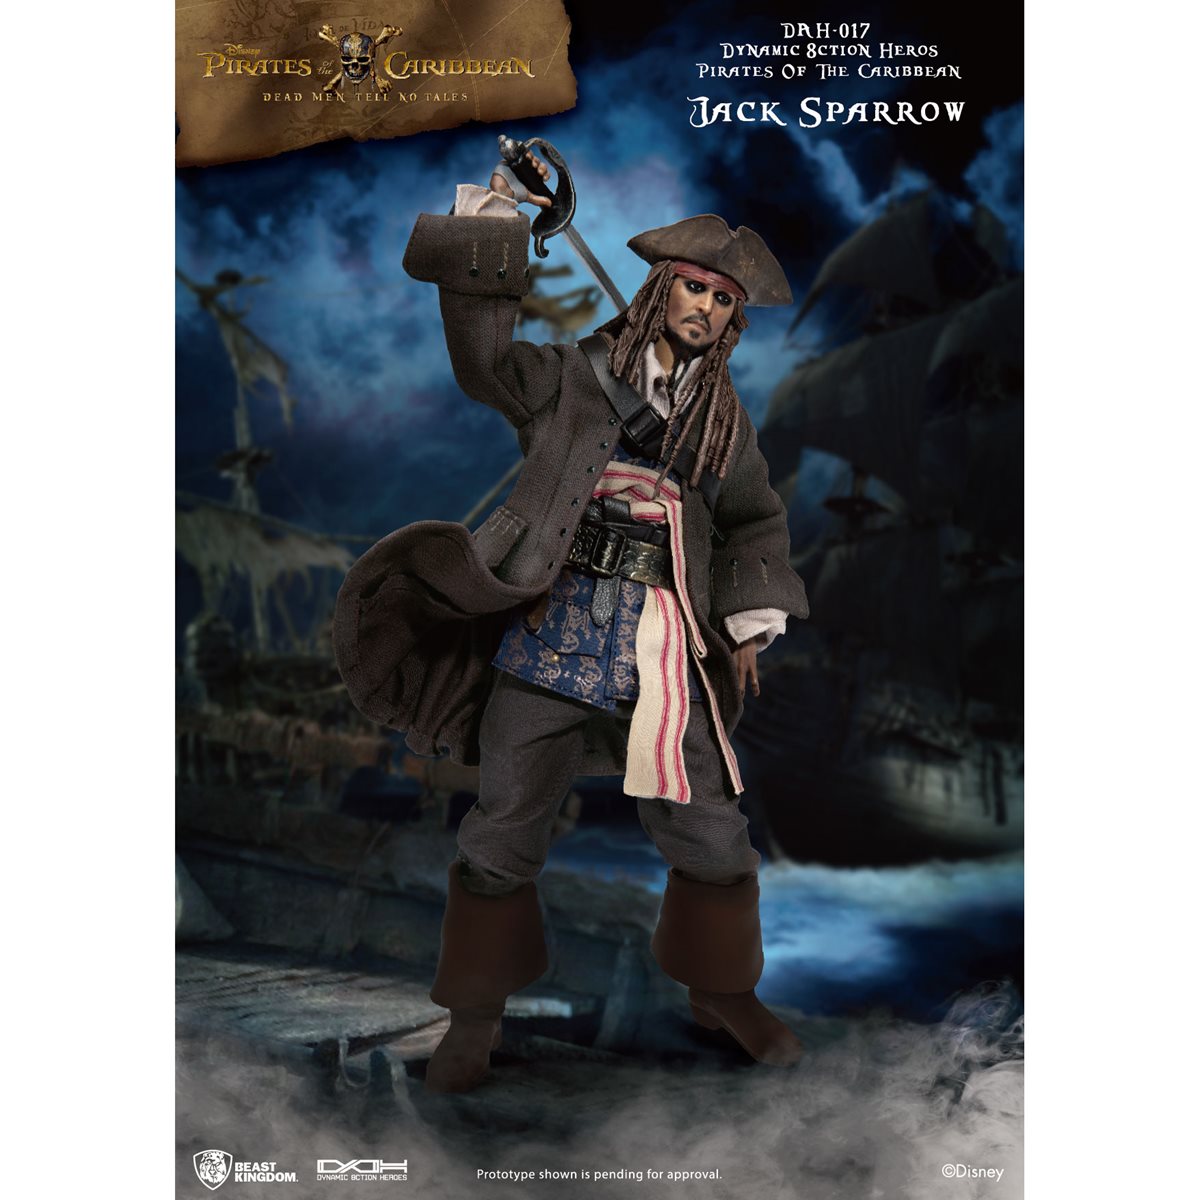 2020 Beast Kingdom Toys POTC Jack Sparrow Dah-017 7" Action Figure MIB Pirates for sale online 